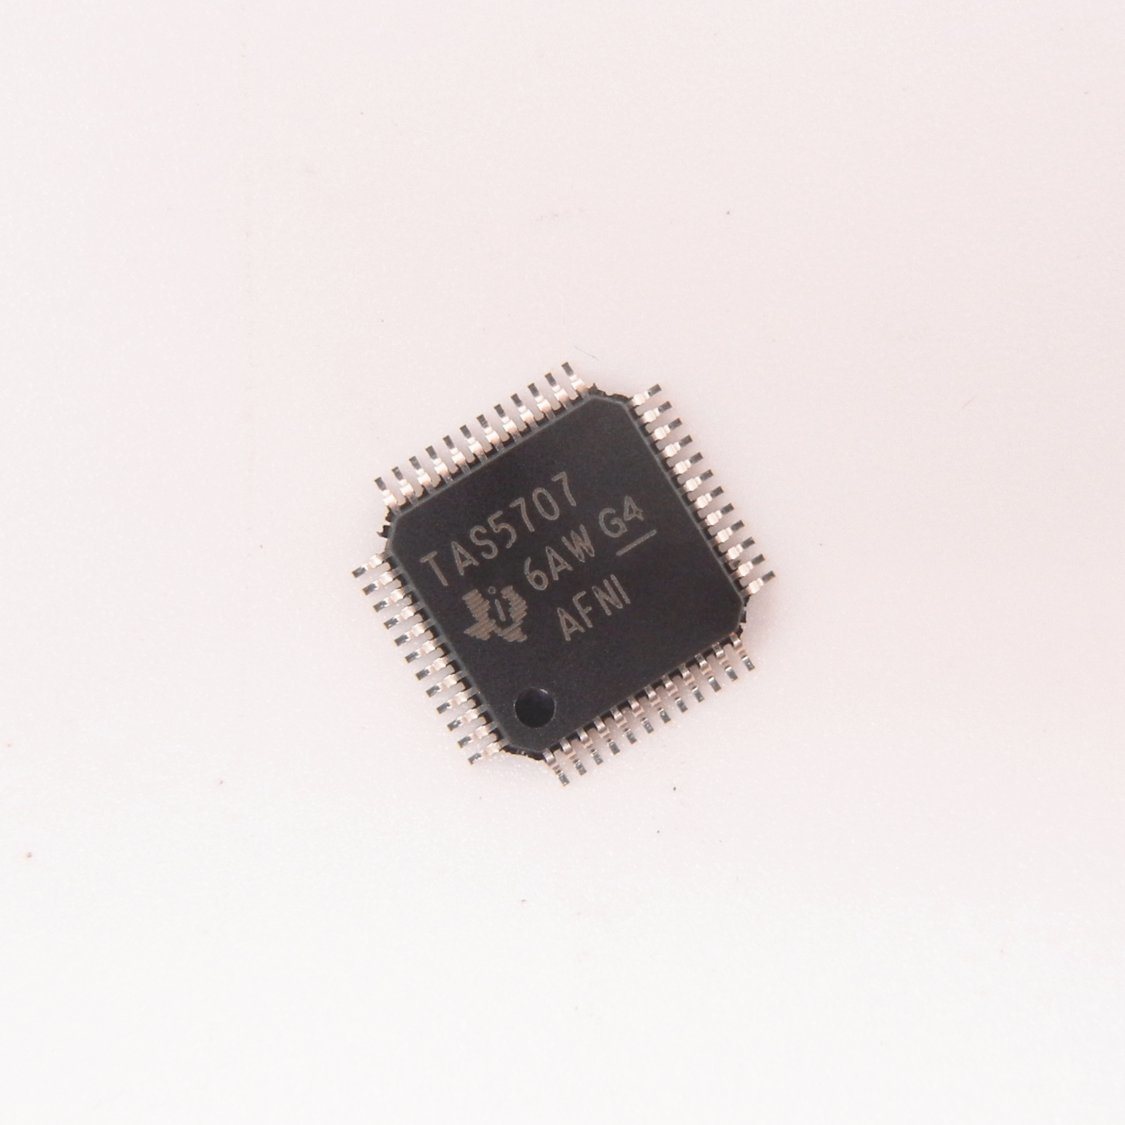 Tas5707phpr New and Original for PCB Borad IC Power Transistor